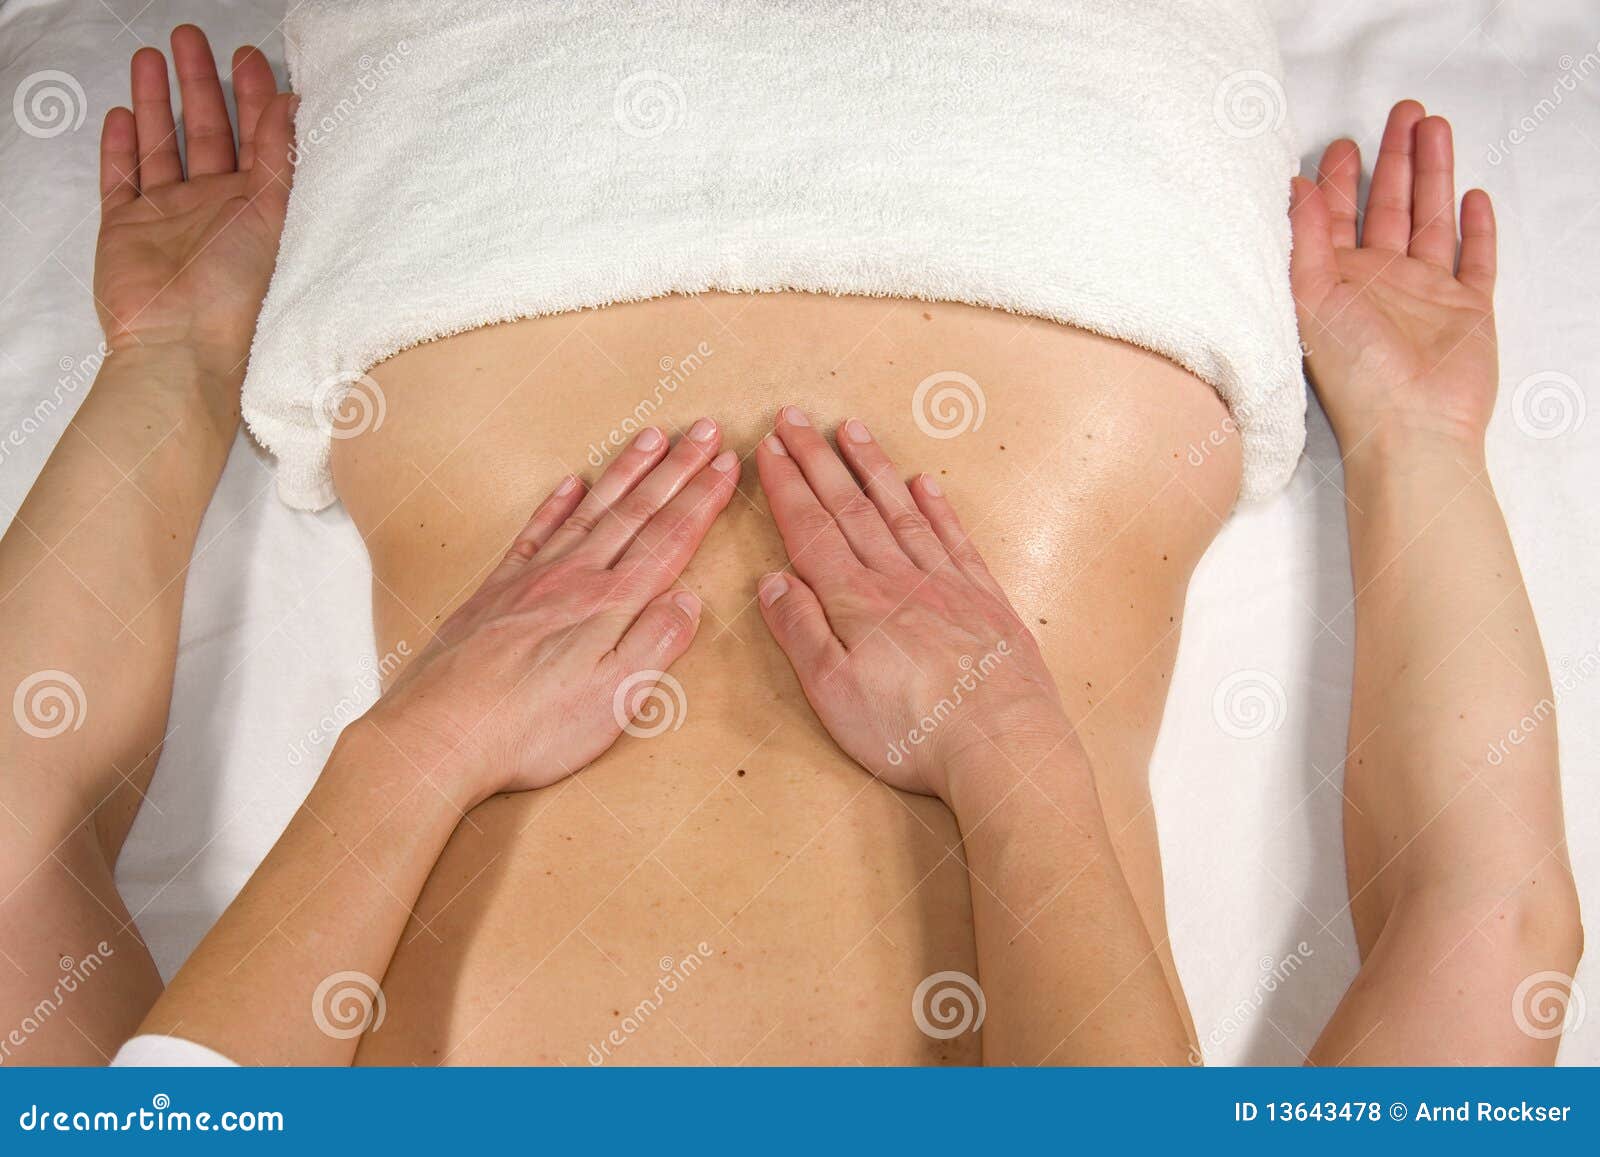 massage at lumbar region